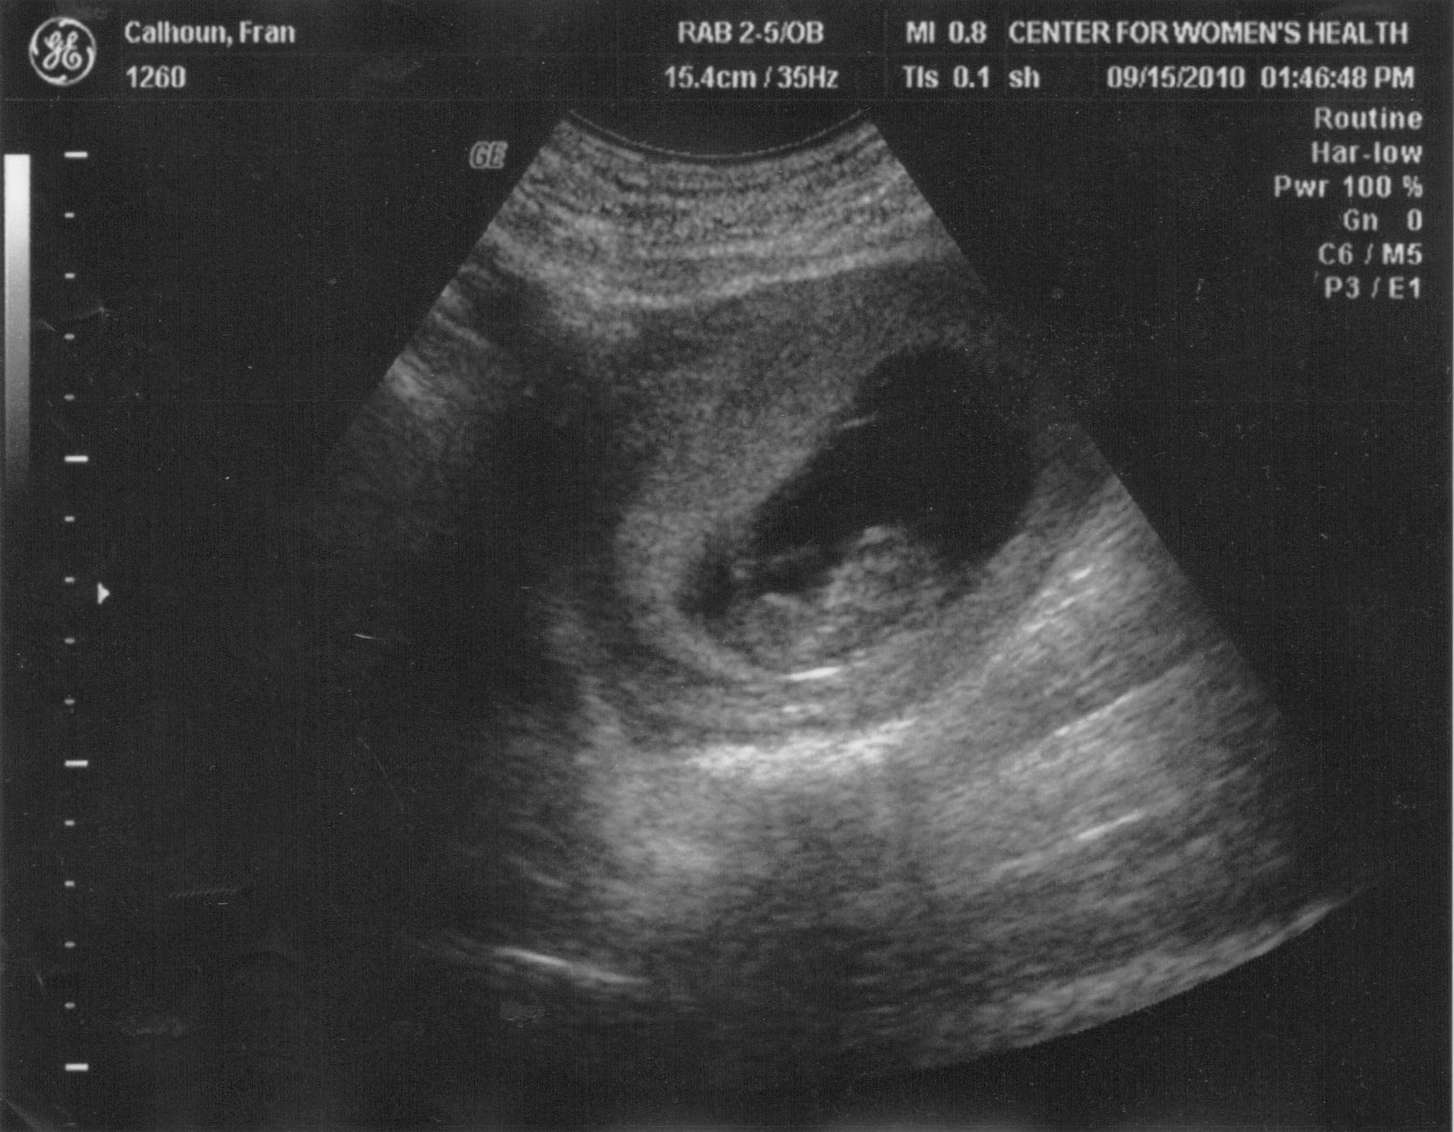 Беременна 1 месяц беременности. Снимок УЗИ на 3 месяце беременности. На 2 и 3 месяц беременности на УЗИ. Фото УЗИ беременности 1 месяц. Беременность 1 месяц фото эмбриона на УЗИ.